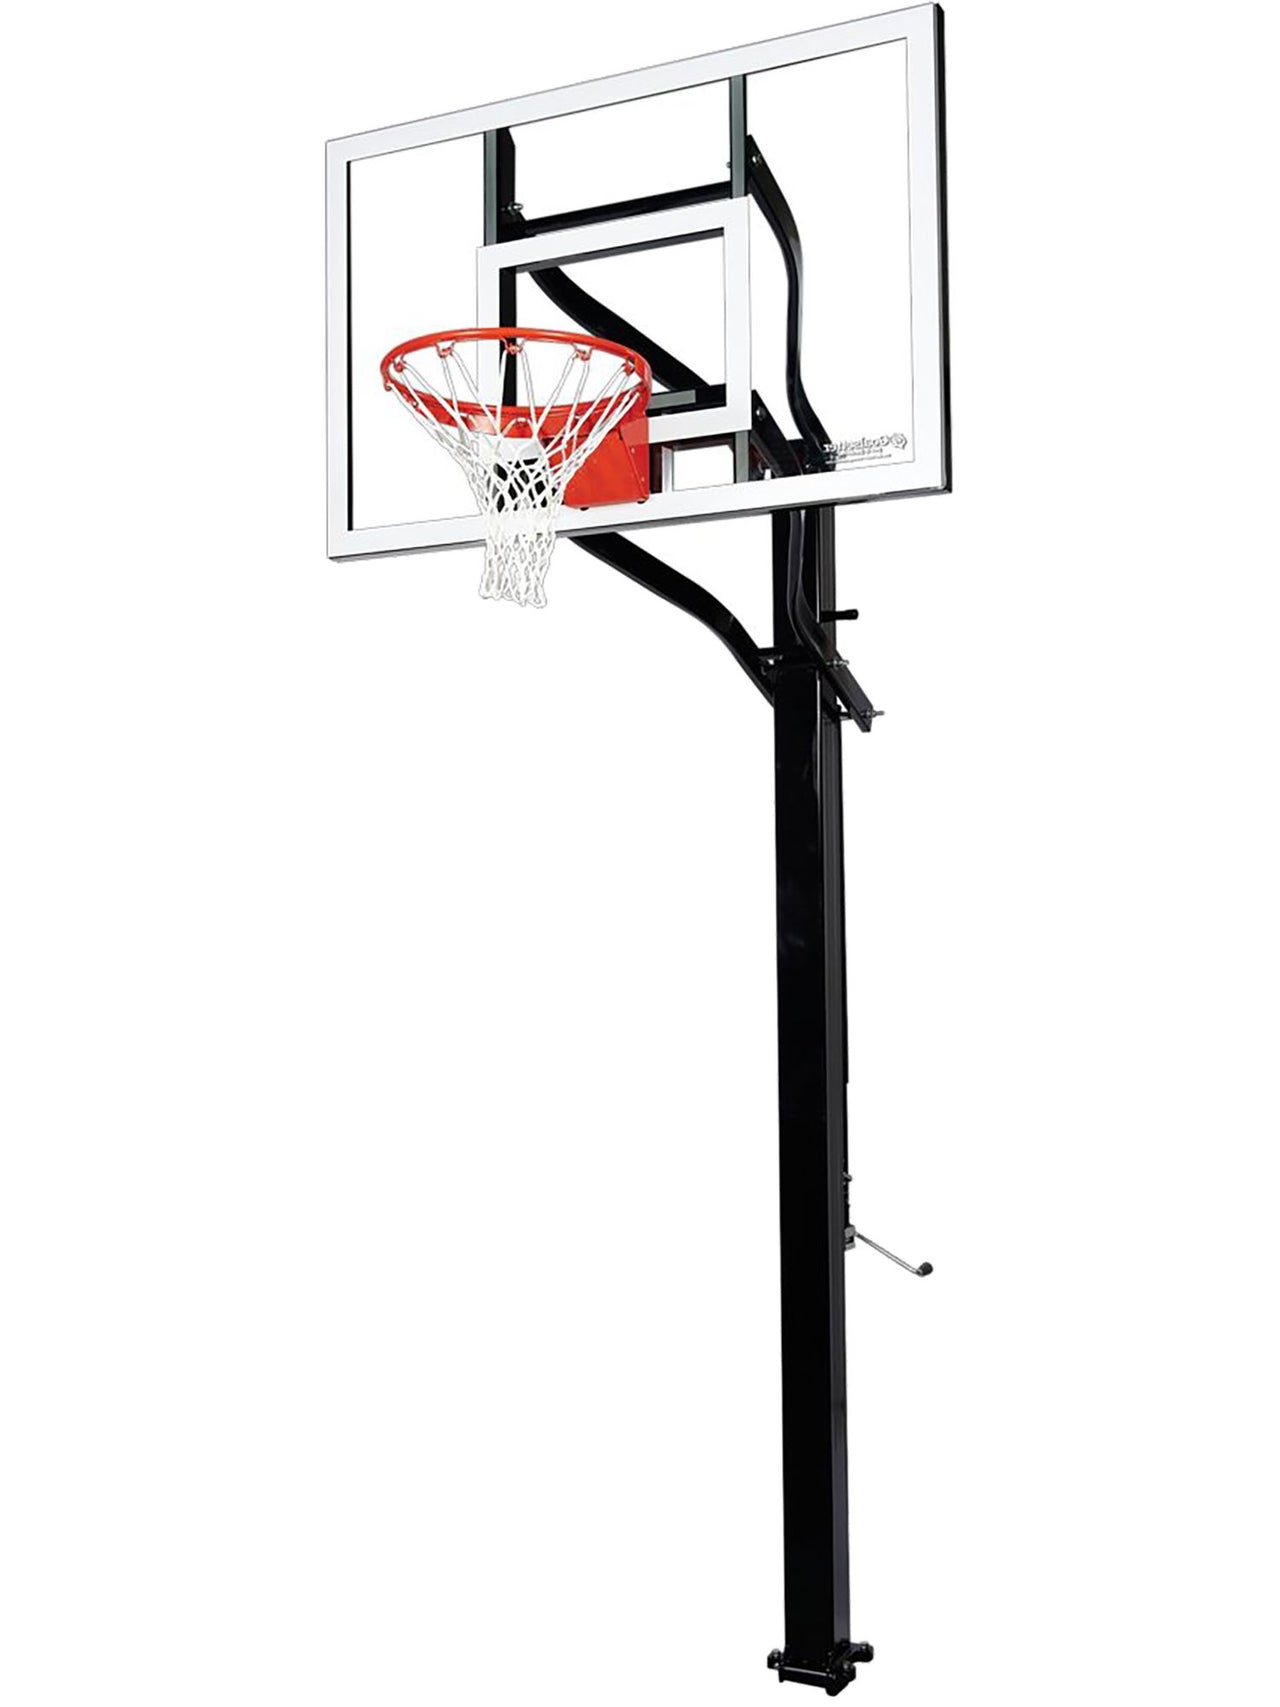 Goalsetter X554 54” Extreme Series Glass In-Ground Basketball Hoop